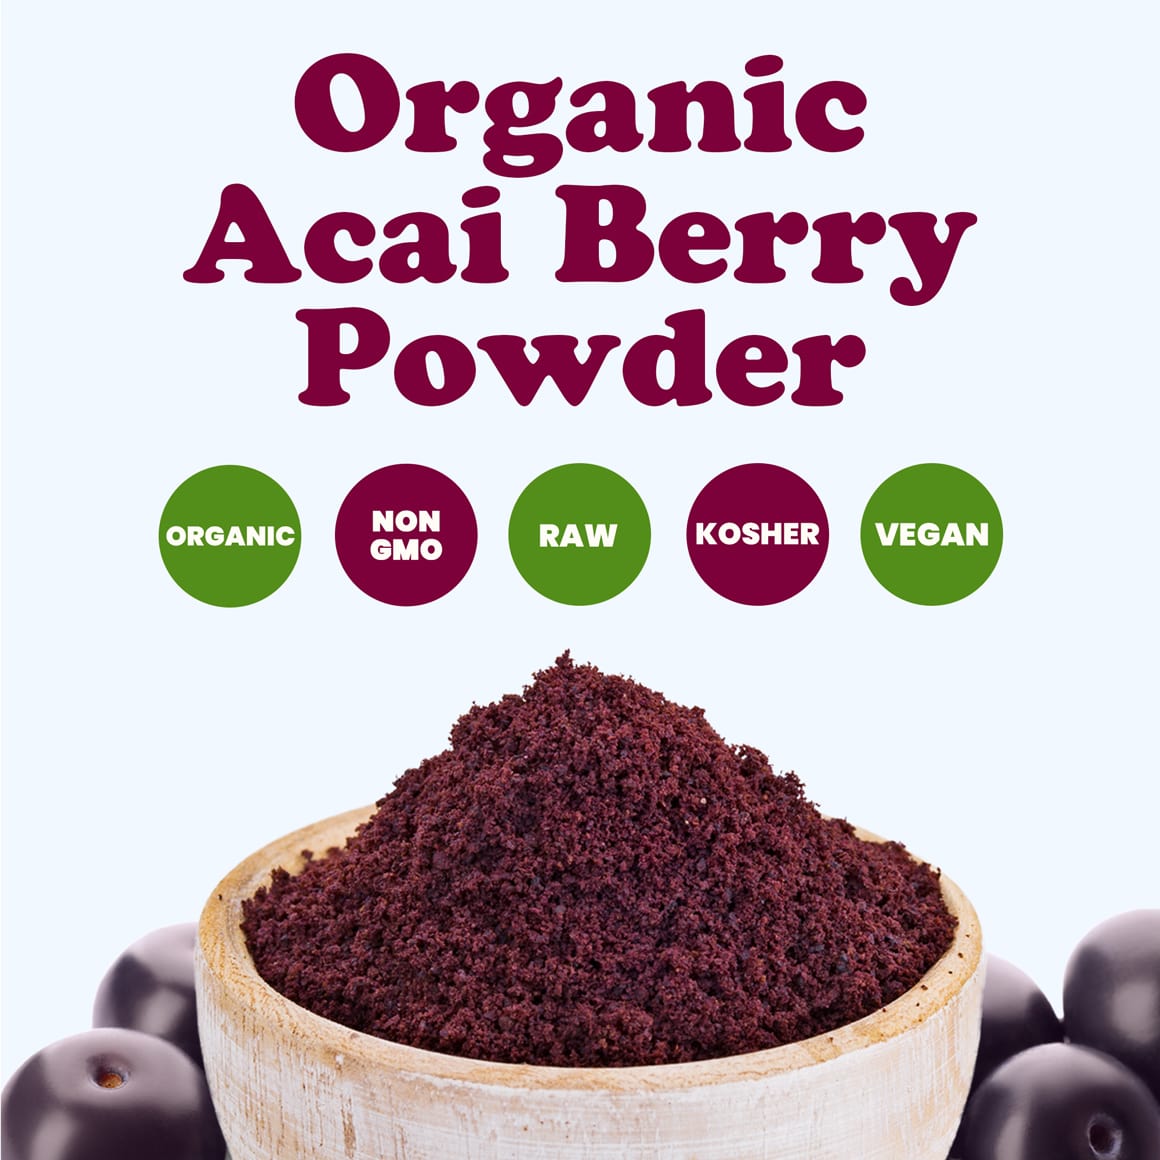 Organic Acai Berry Powder info1